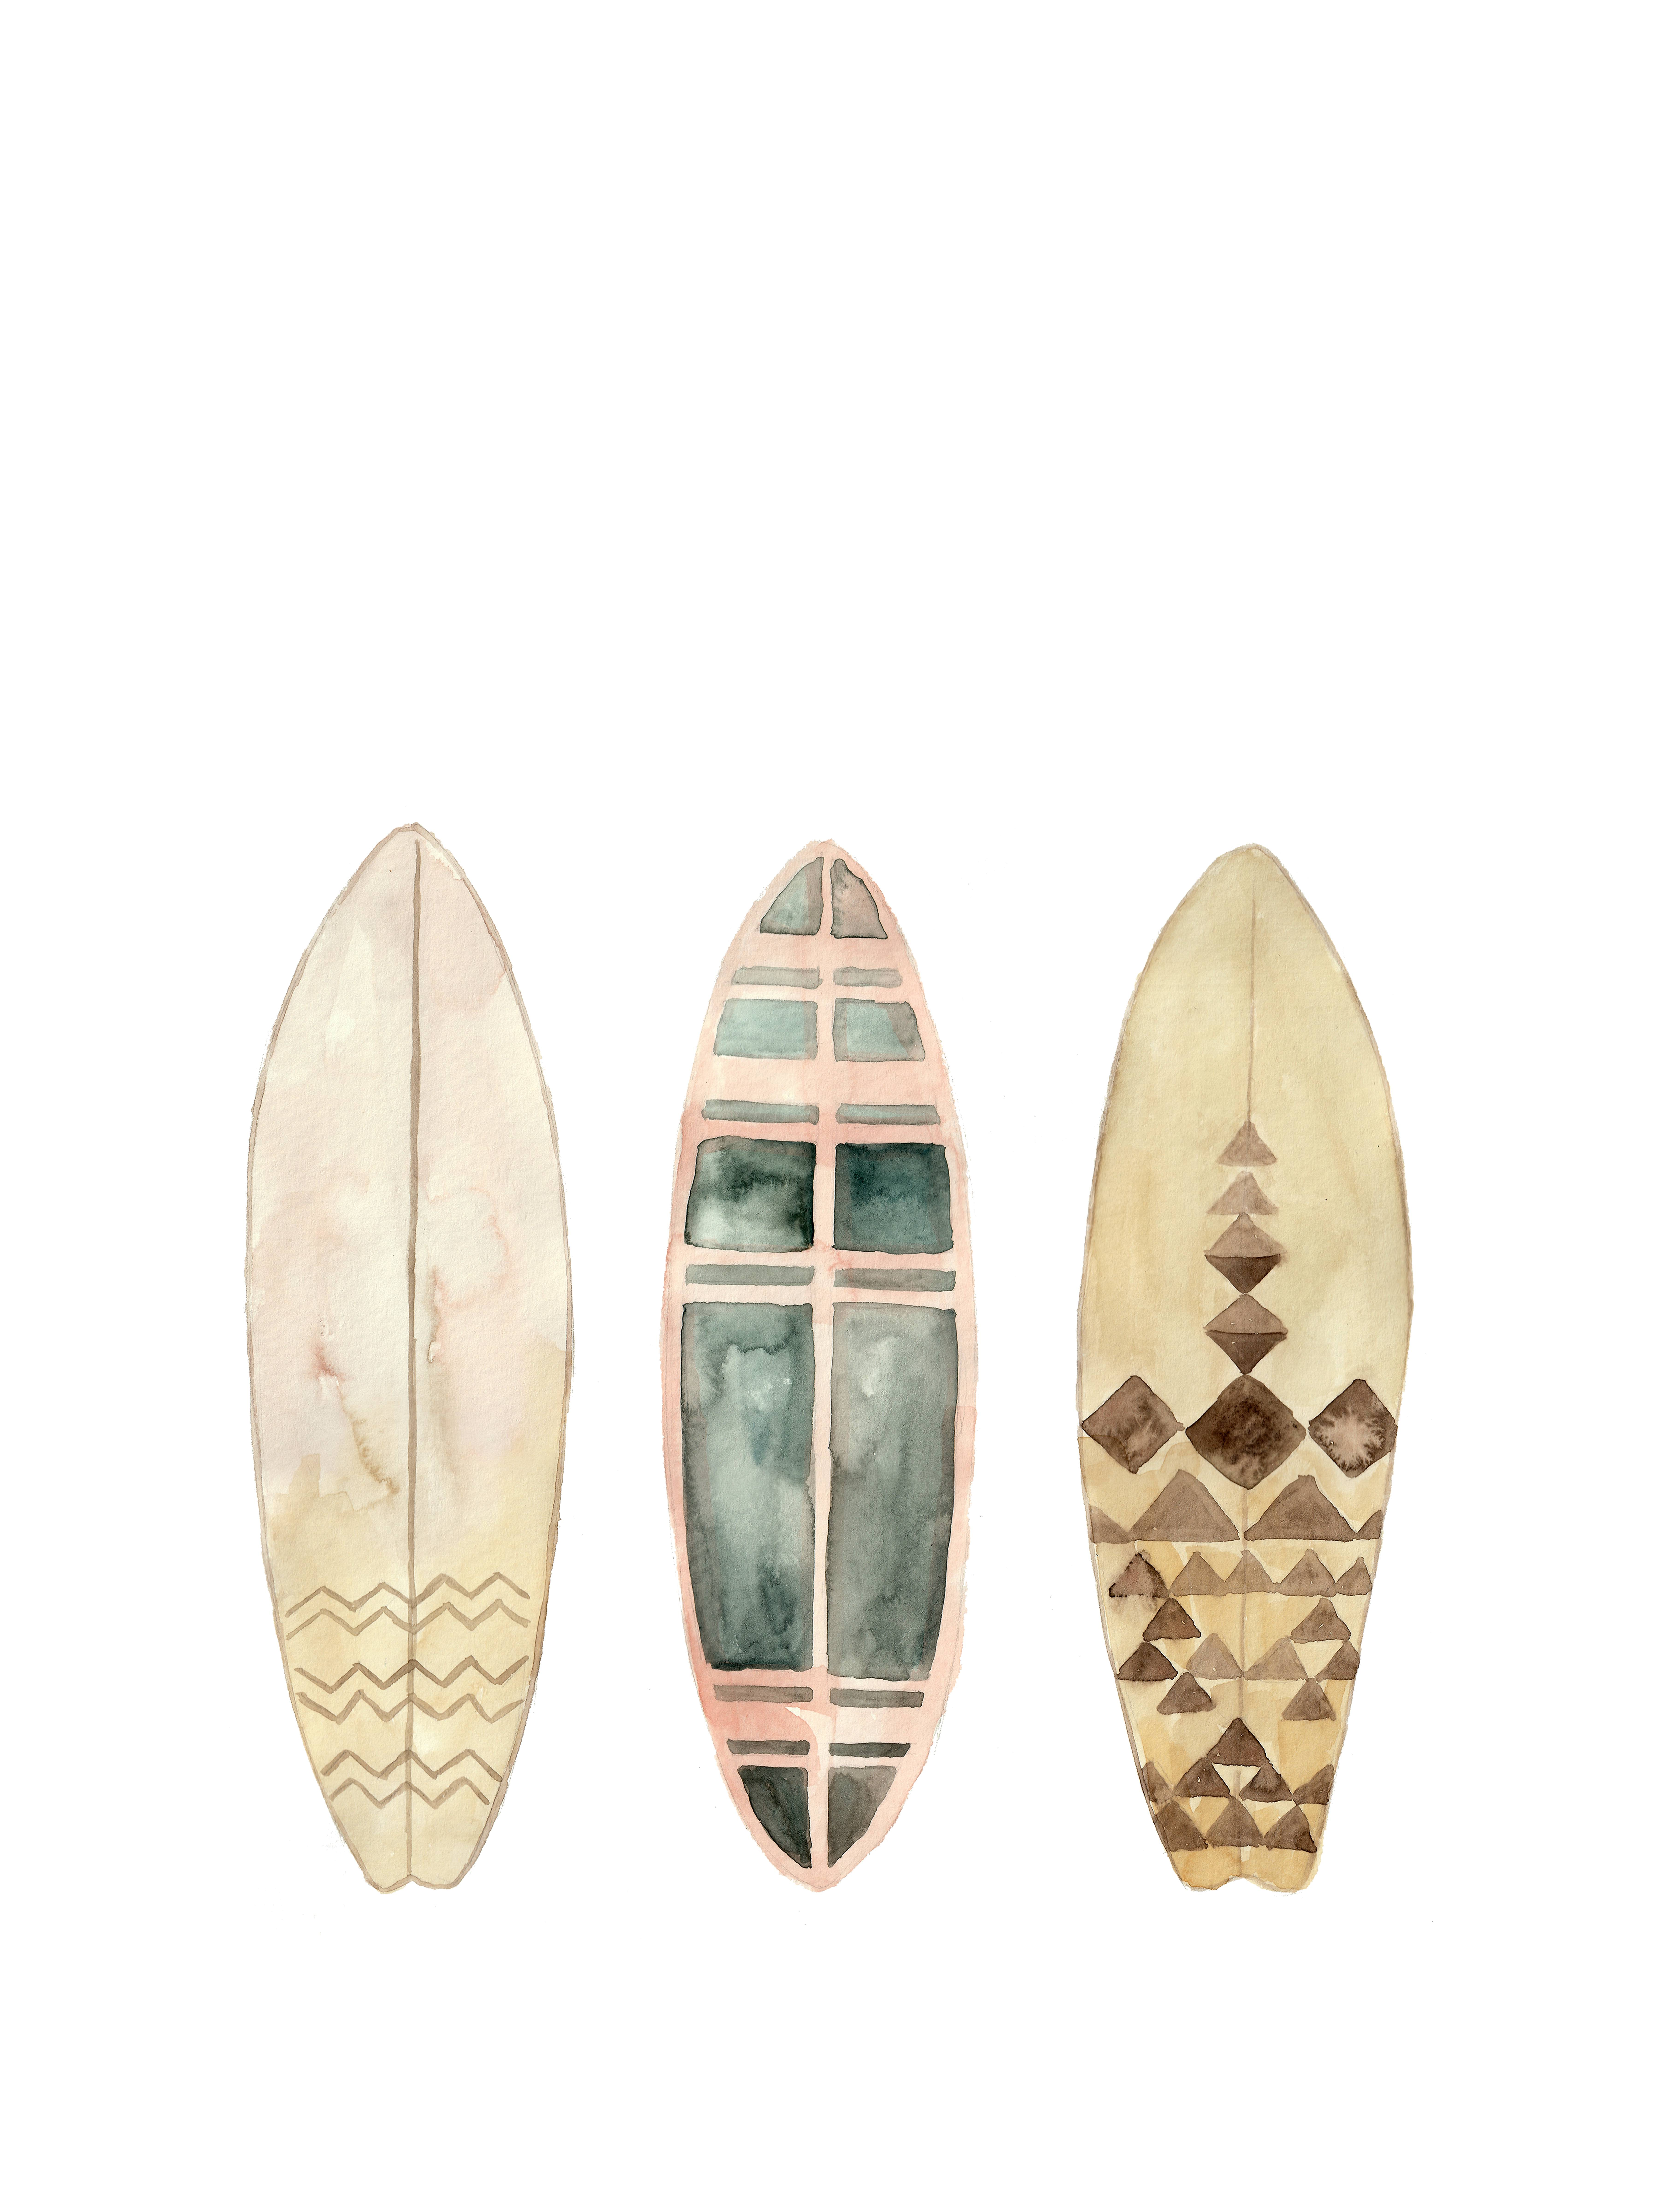 629-surfboards1.jpg